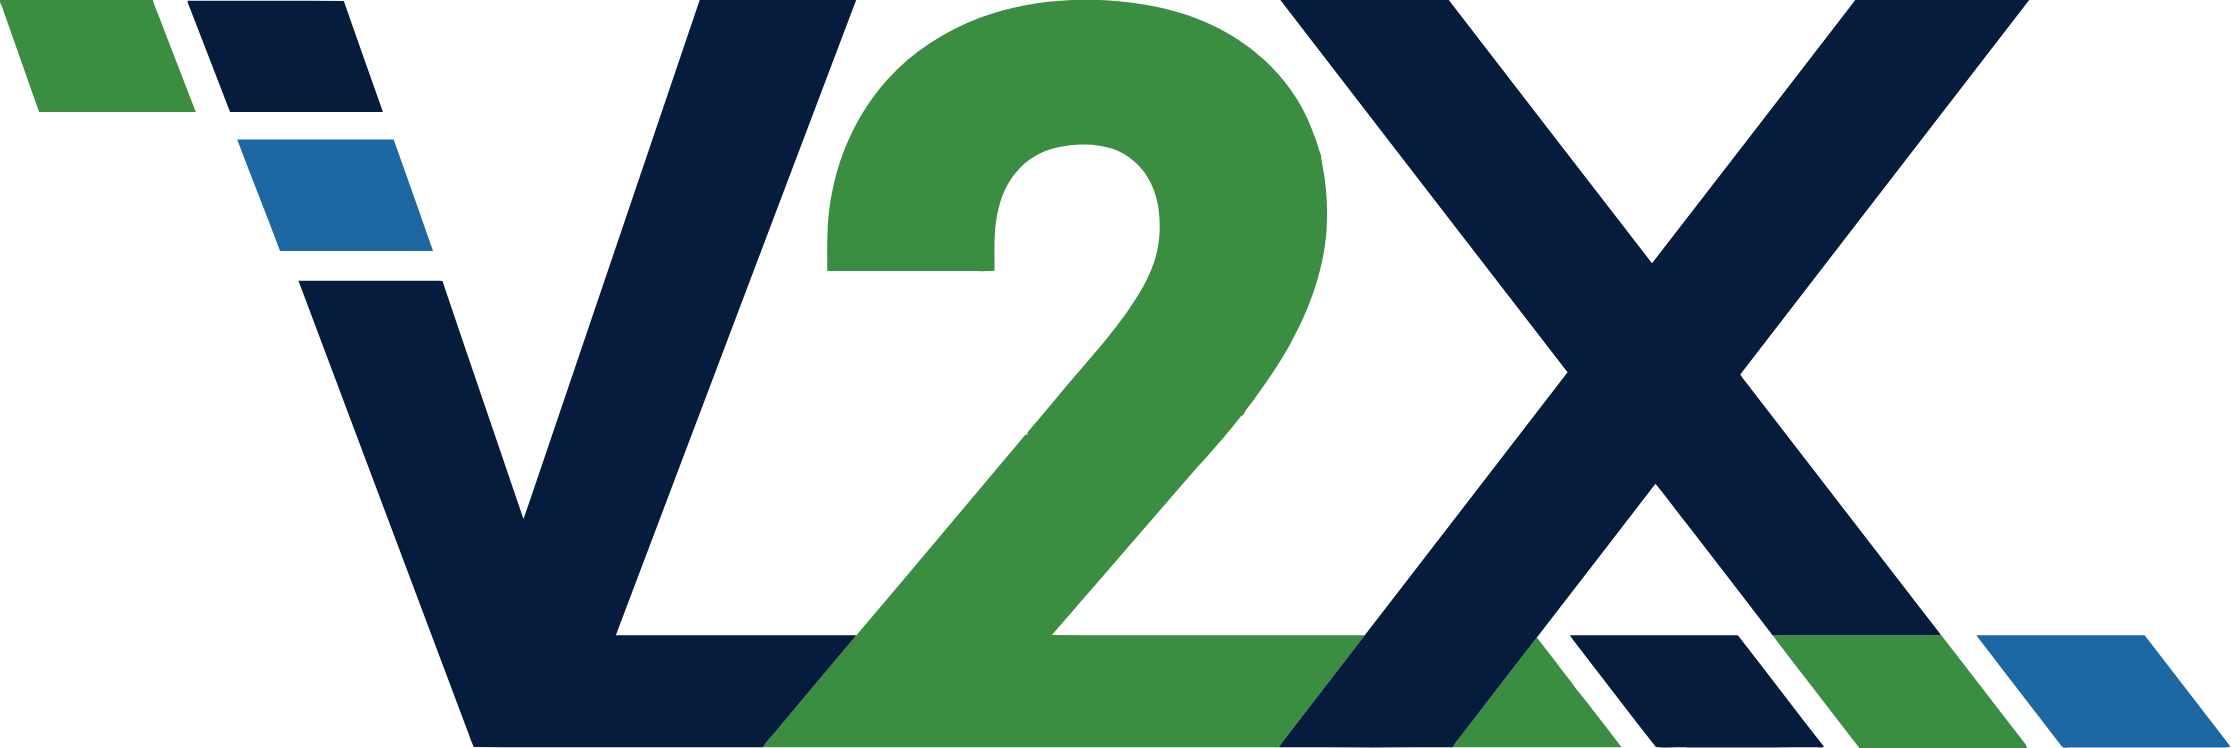 V2X logo (PNG transparent)